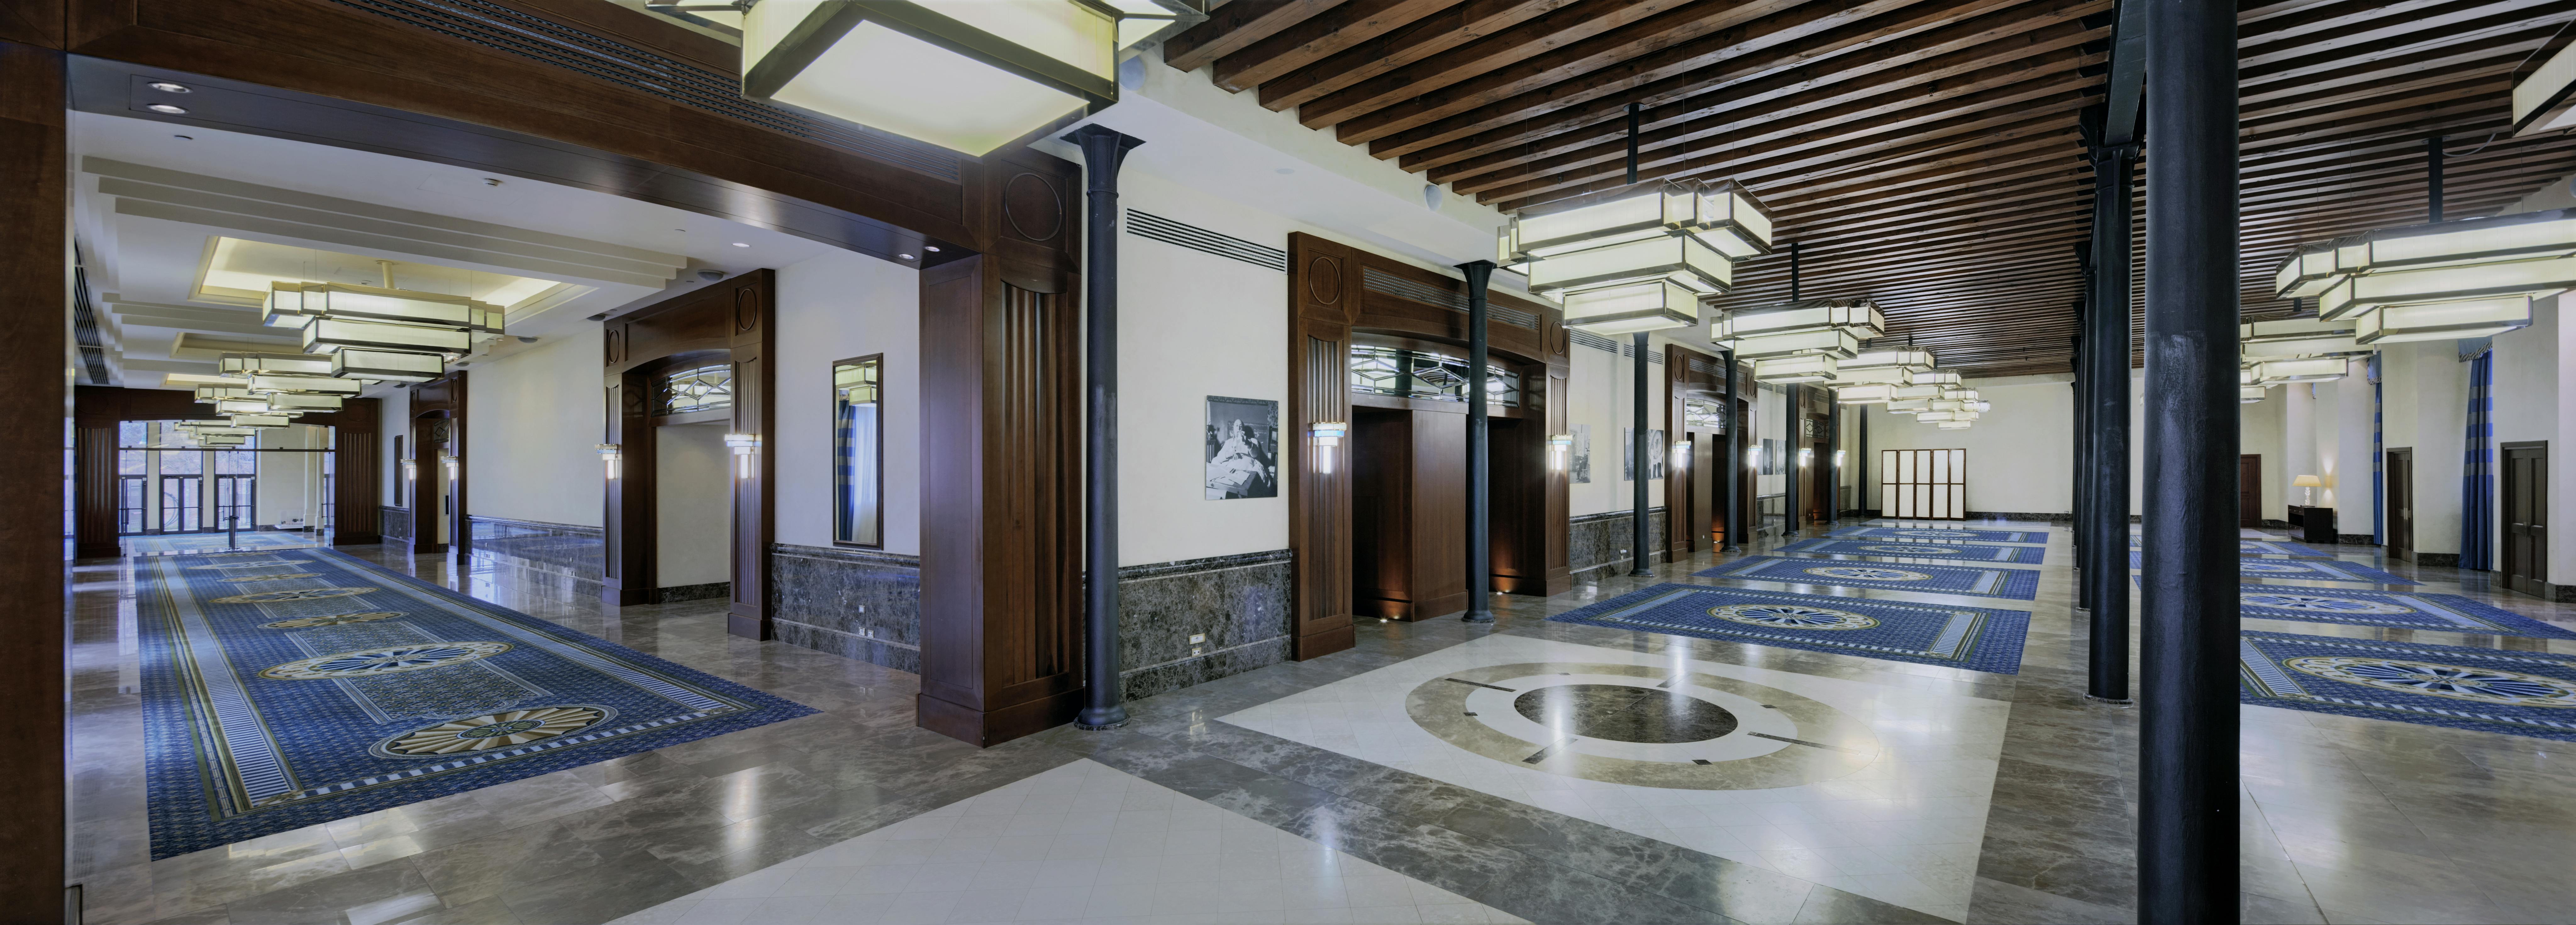 hotel-foyer-venice-columns-frescoes